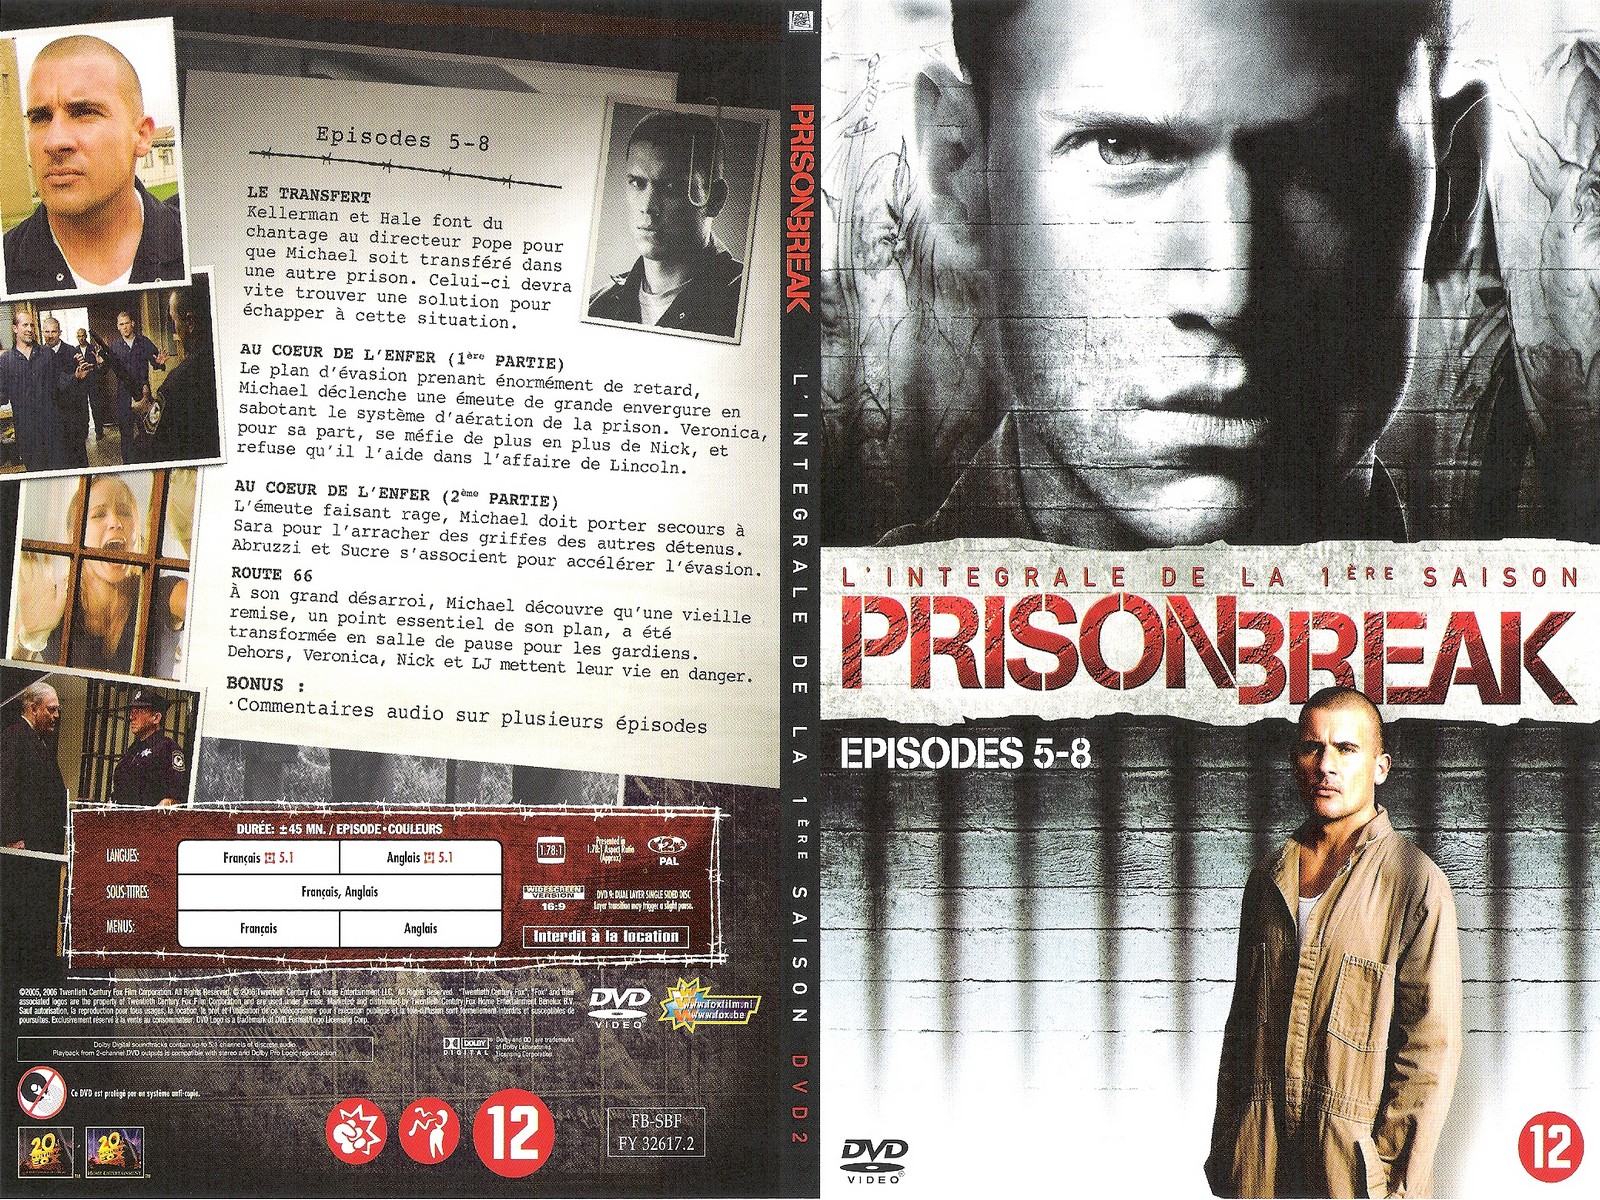 Jaquette DVD Prison break saison 1 dvd 2 - SLIM